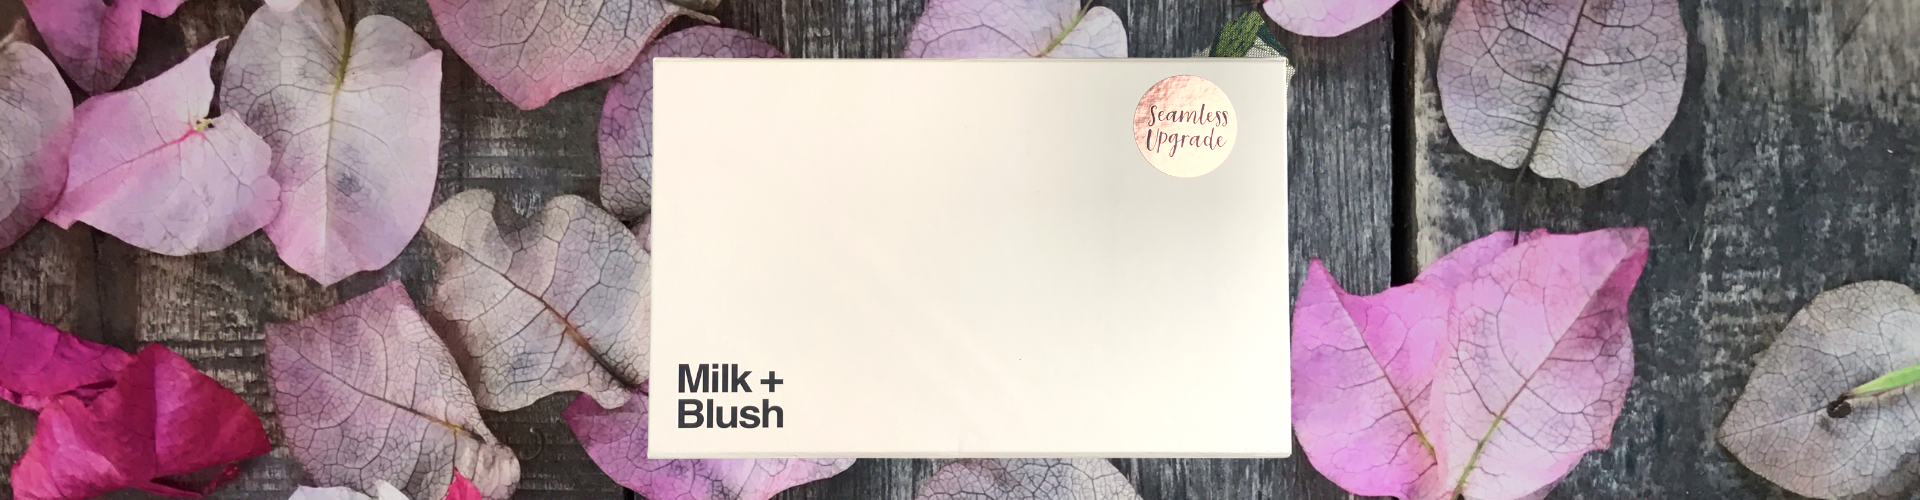 Milk & Blush hair extensions review website banner